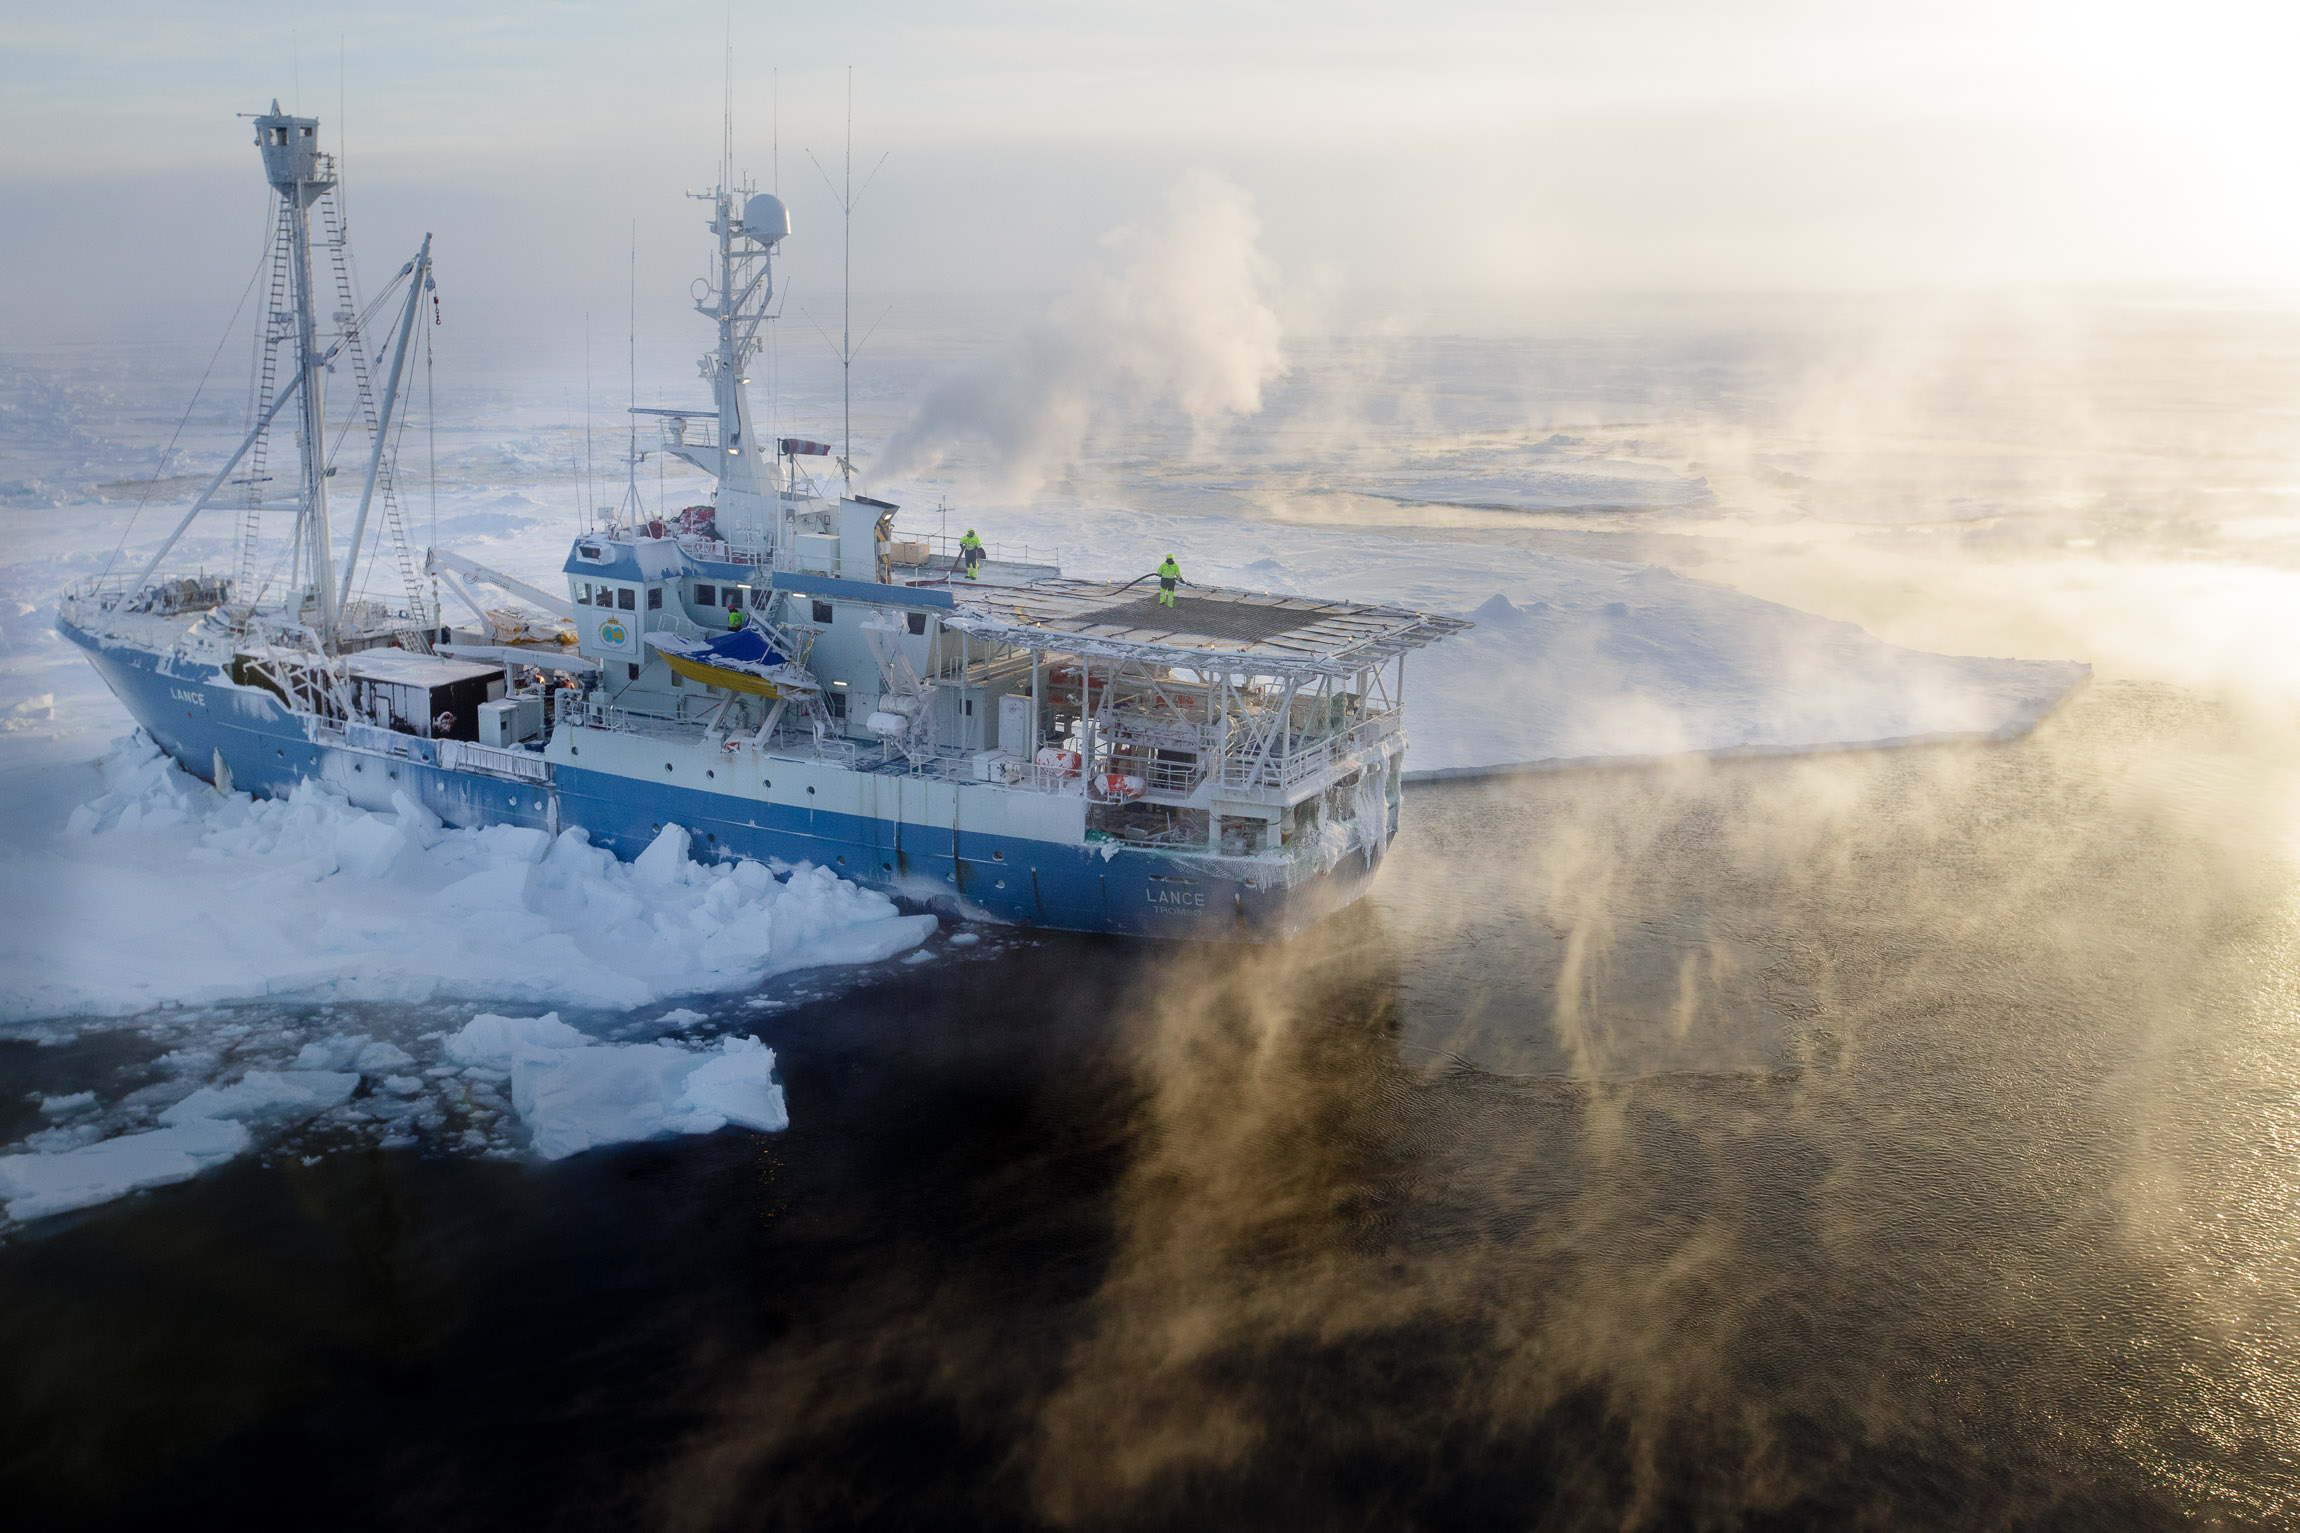 Research ship stuck in sea ice floe